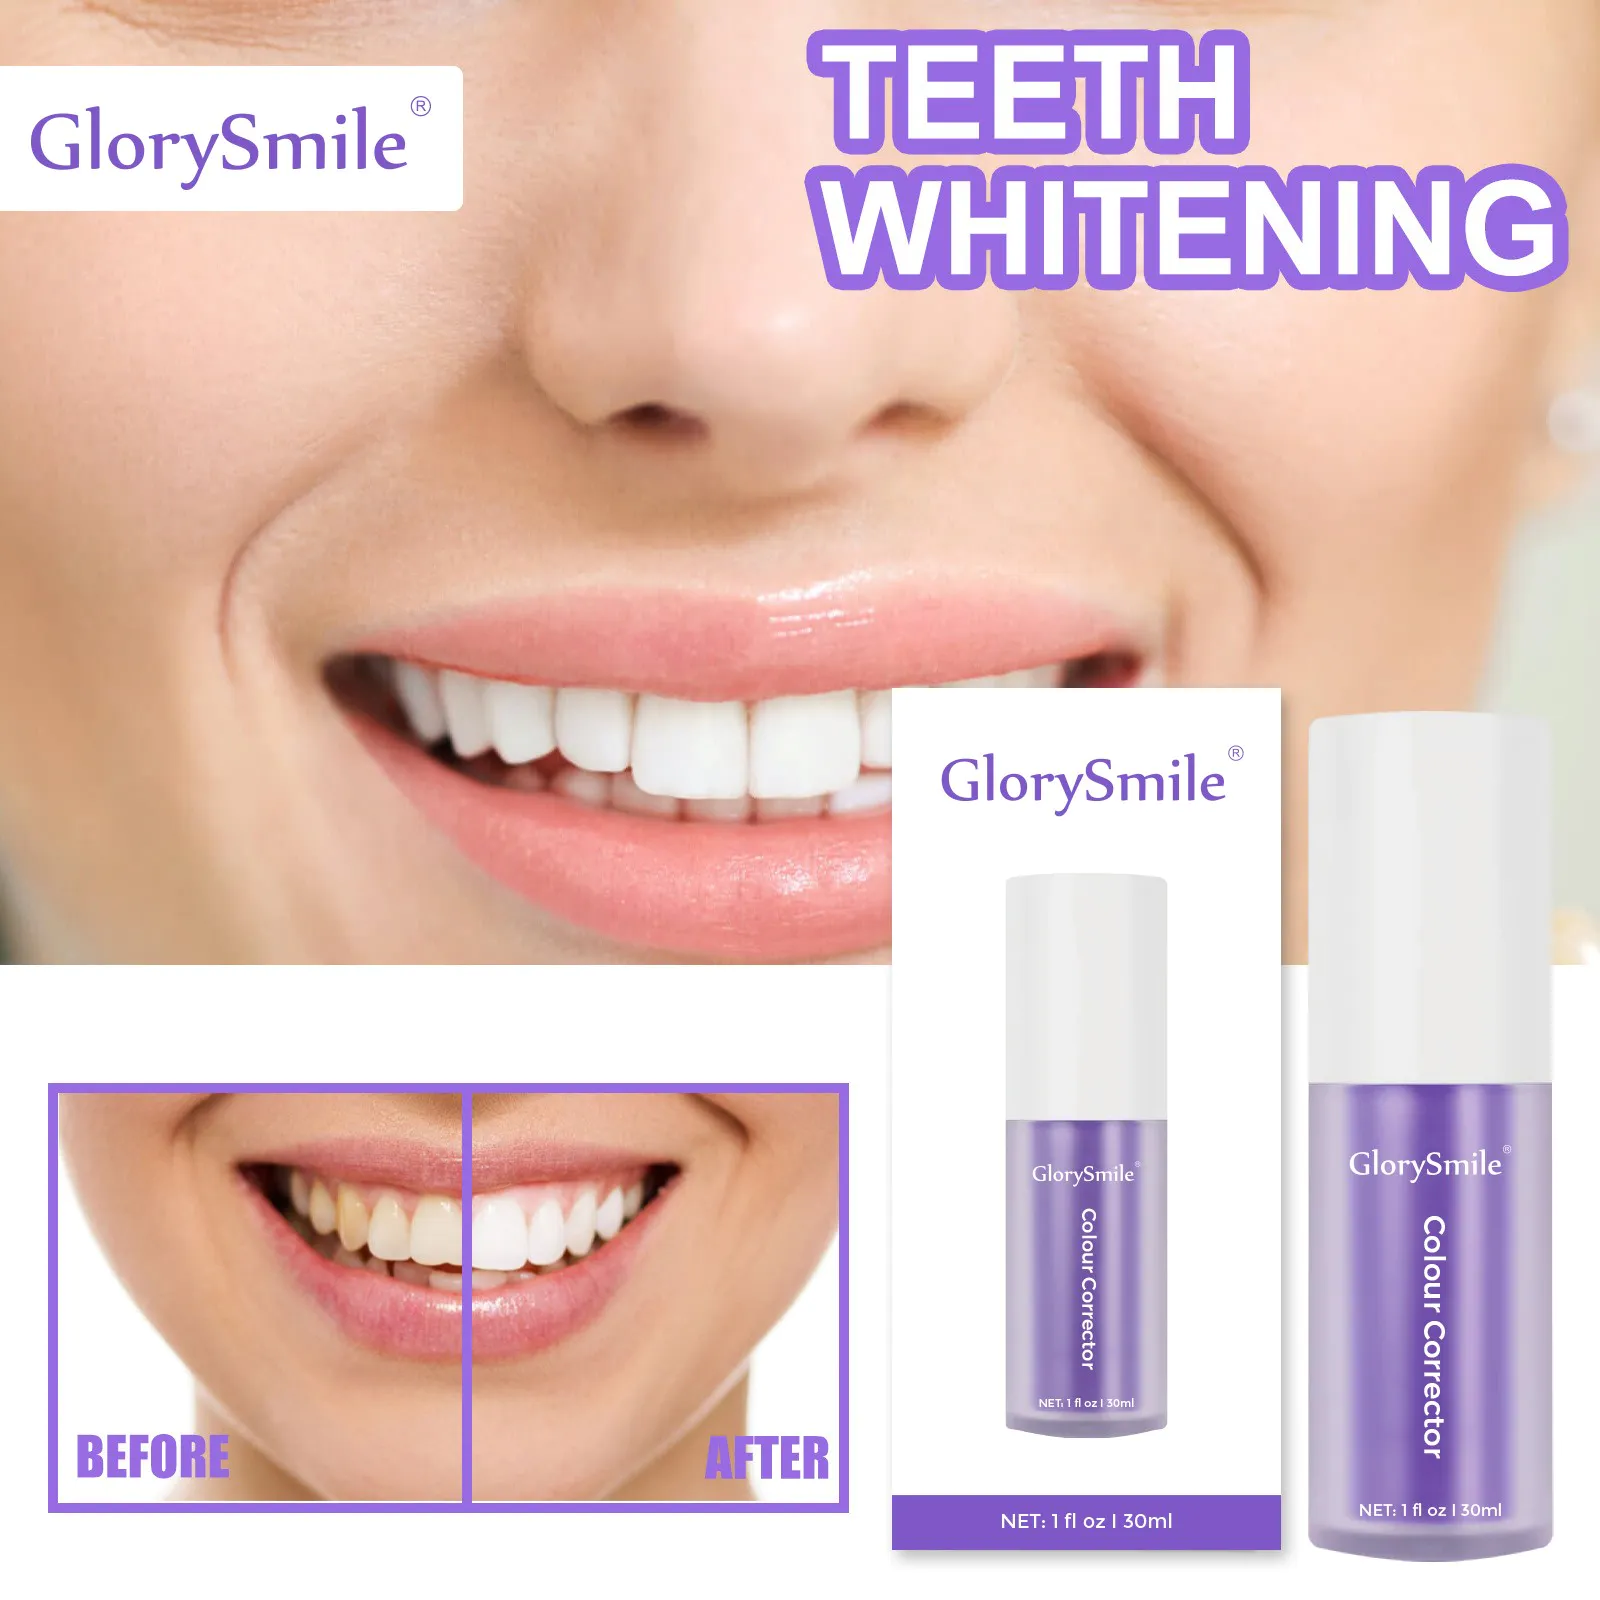 GlorySmile good selling vendors for whitening teeth